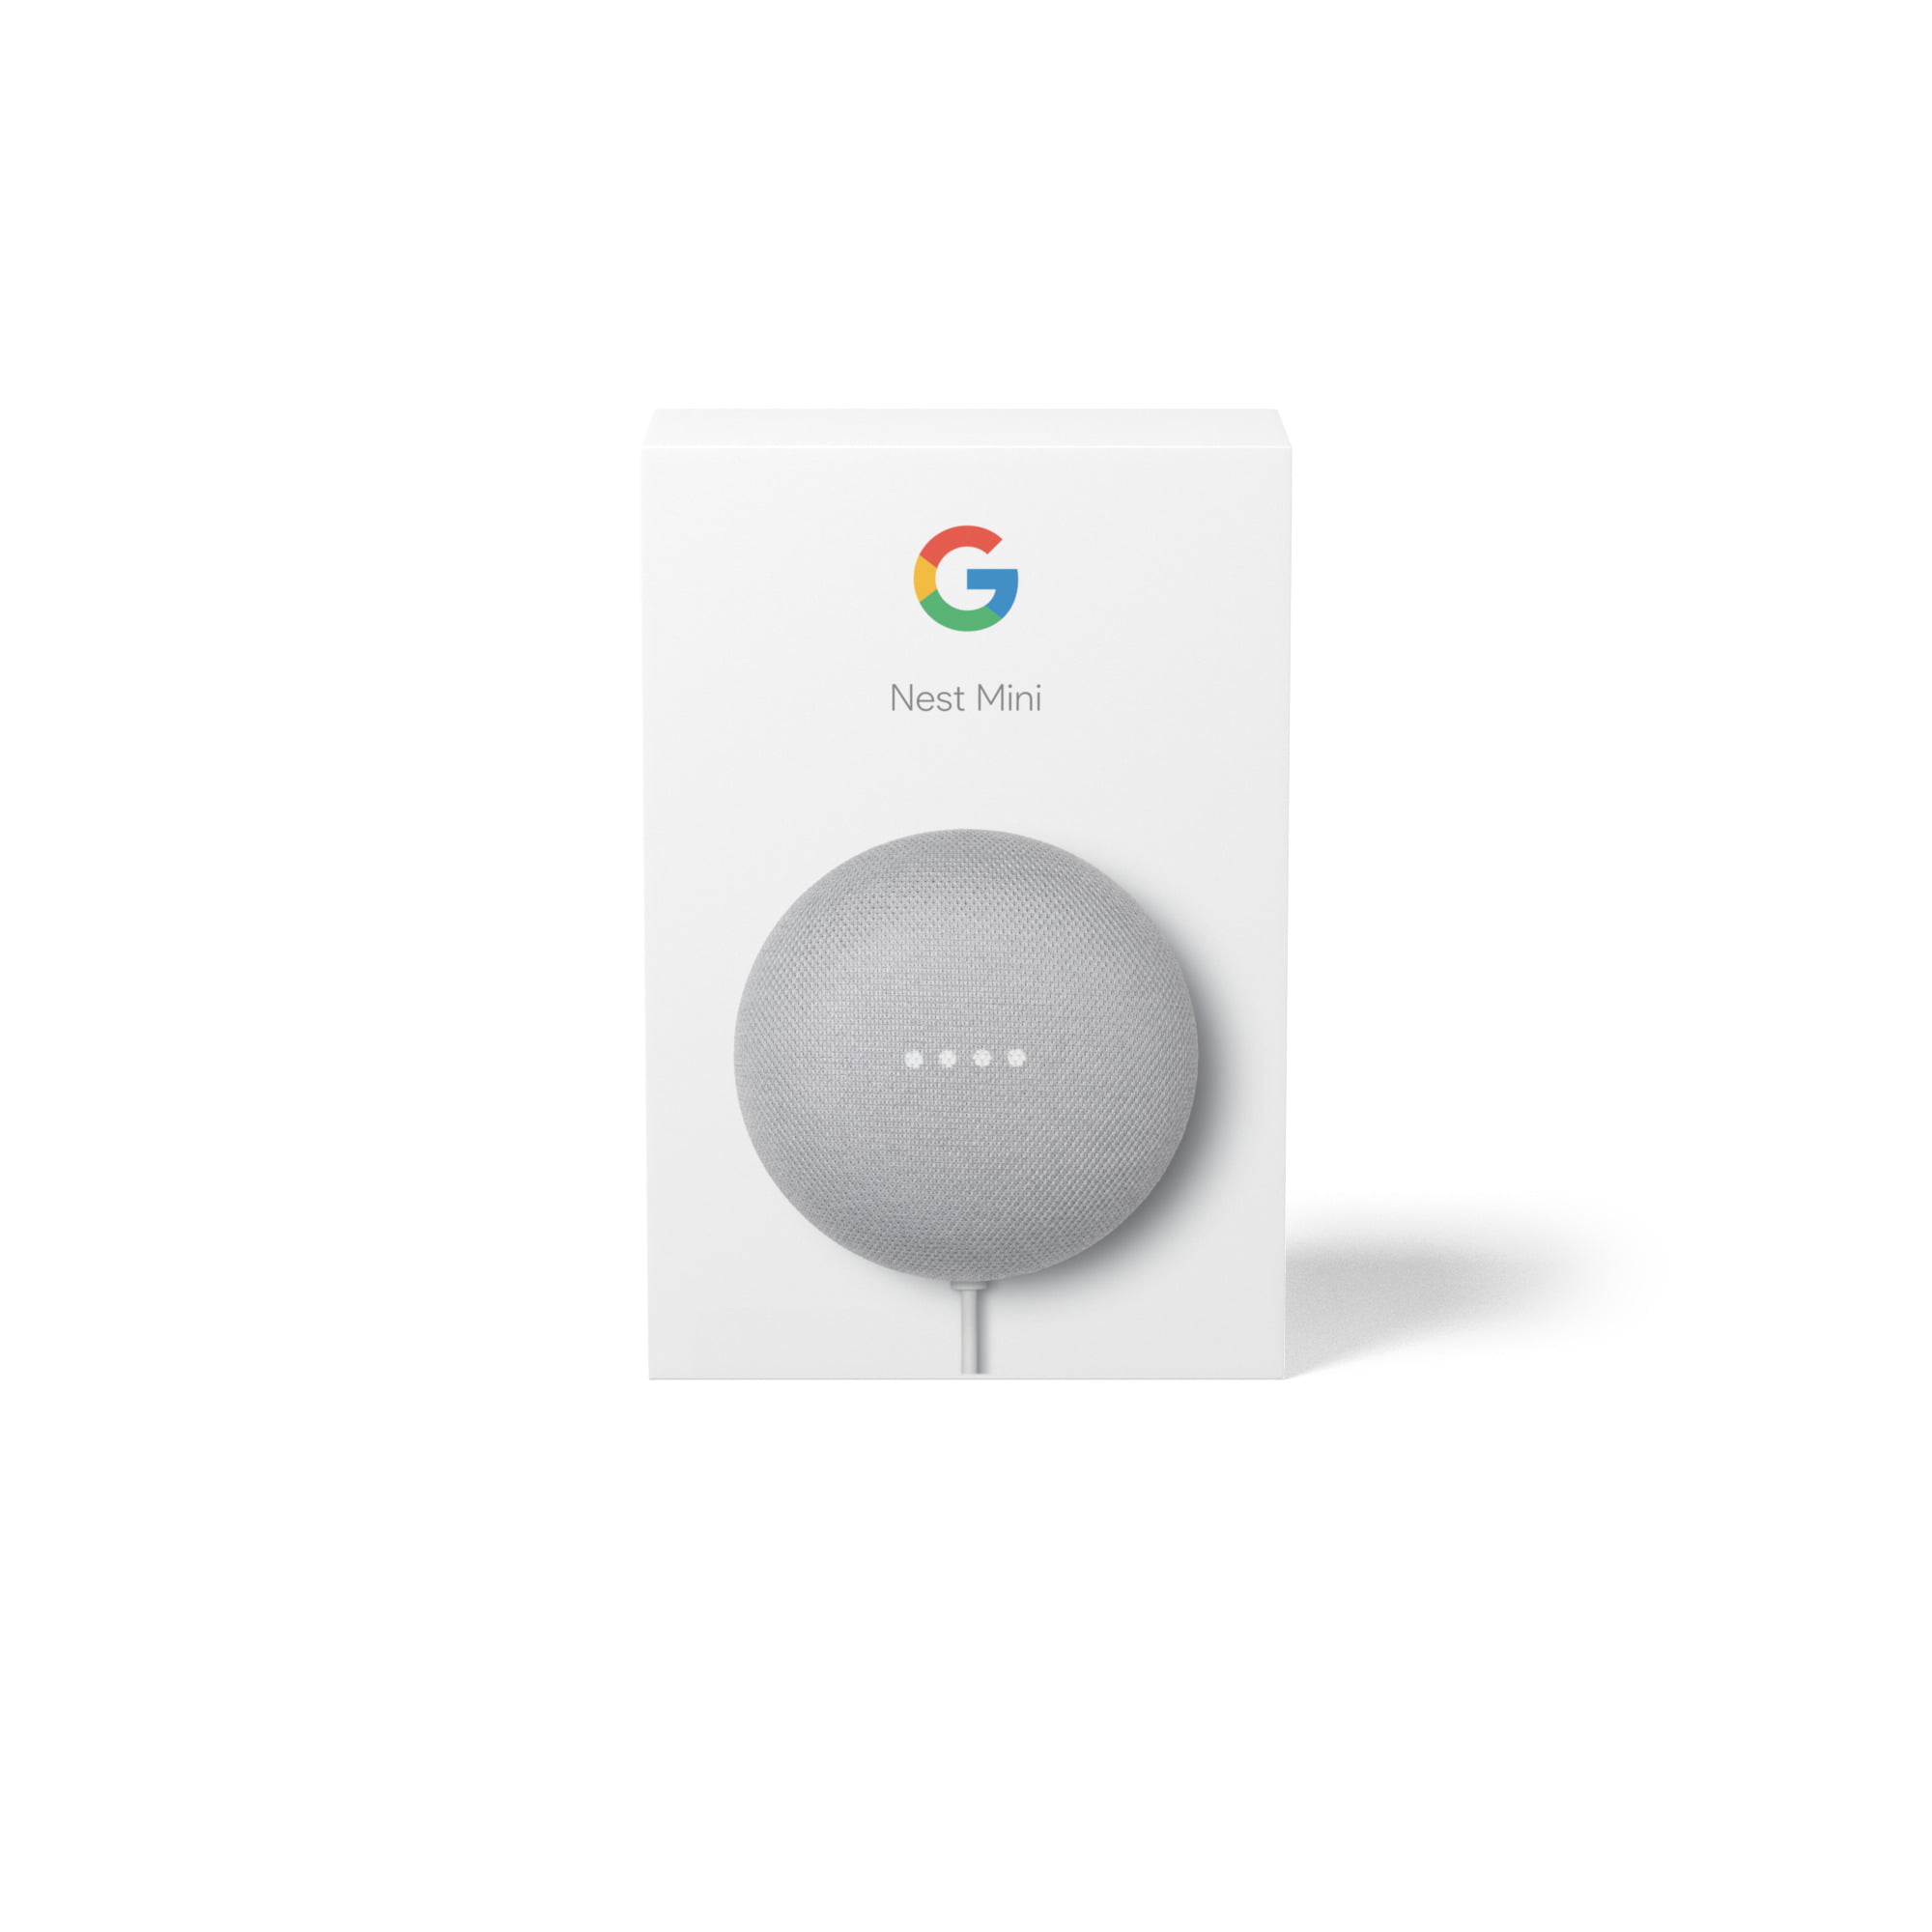 Google Nest Mini (2nd Generation) - Chalk or Charcoal $18.00 + Free S&H w/ Walmart+ or $35+